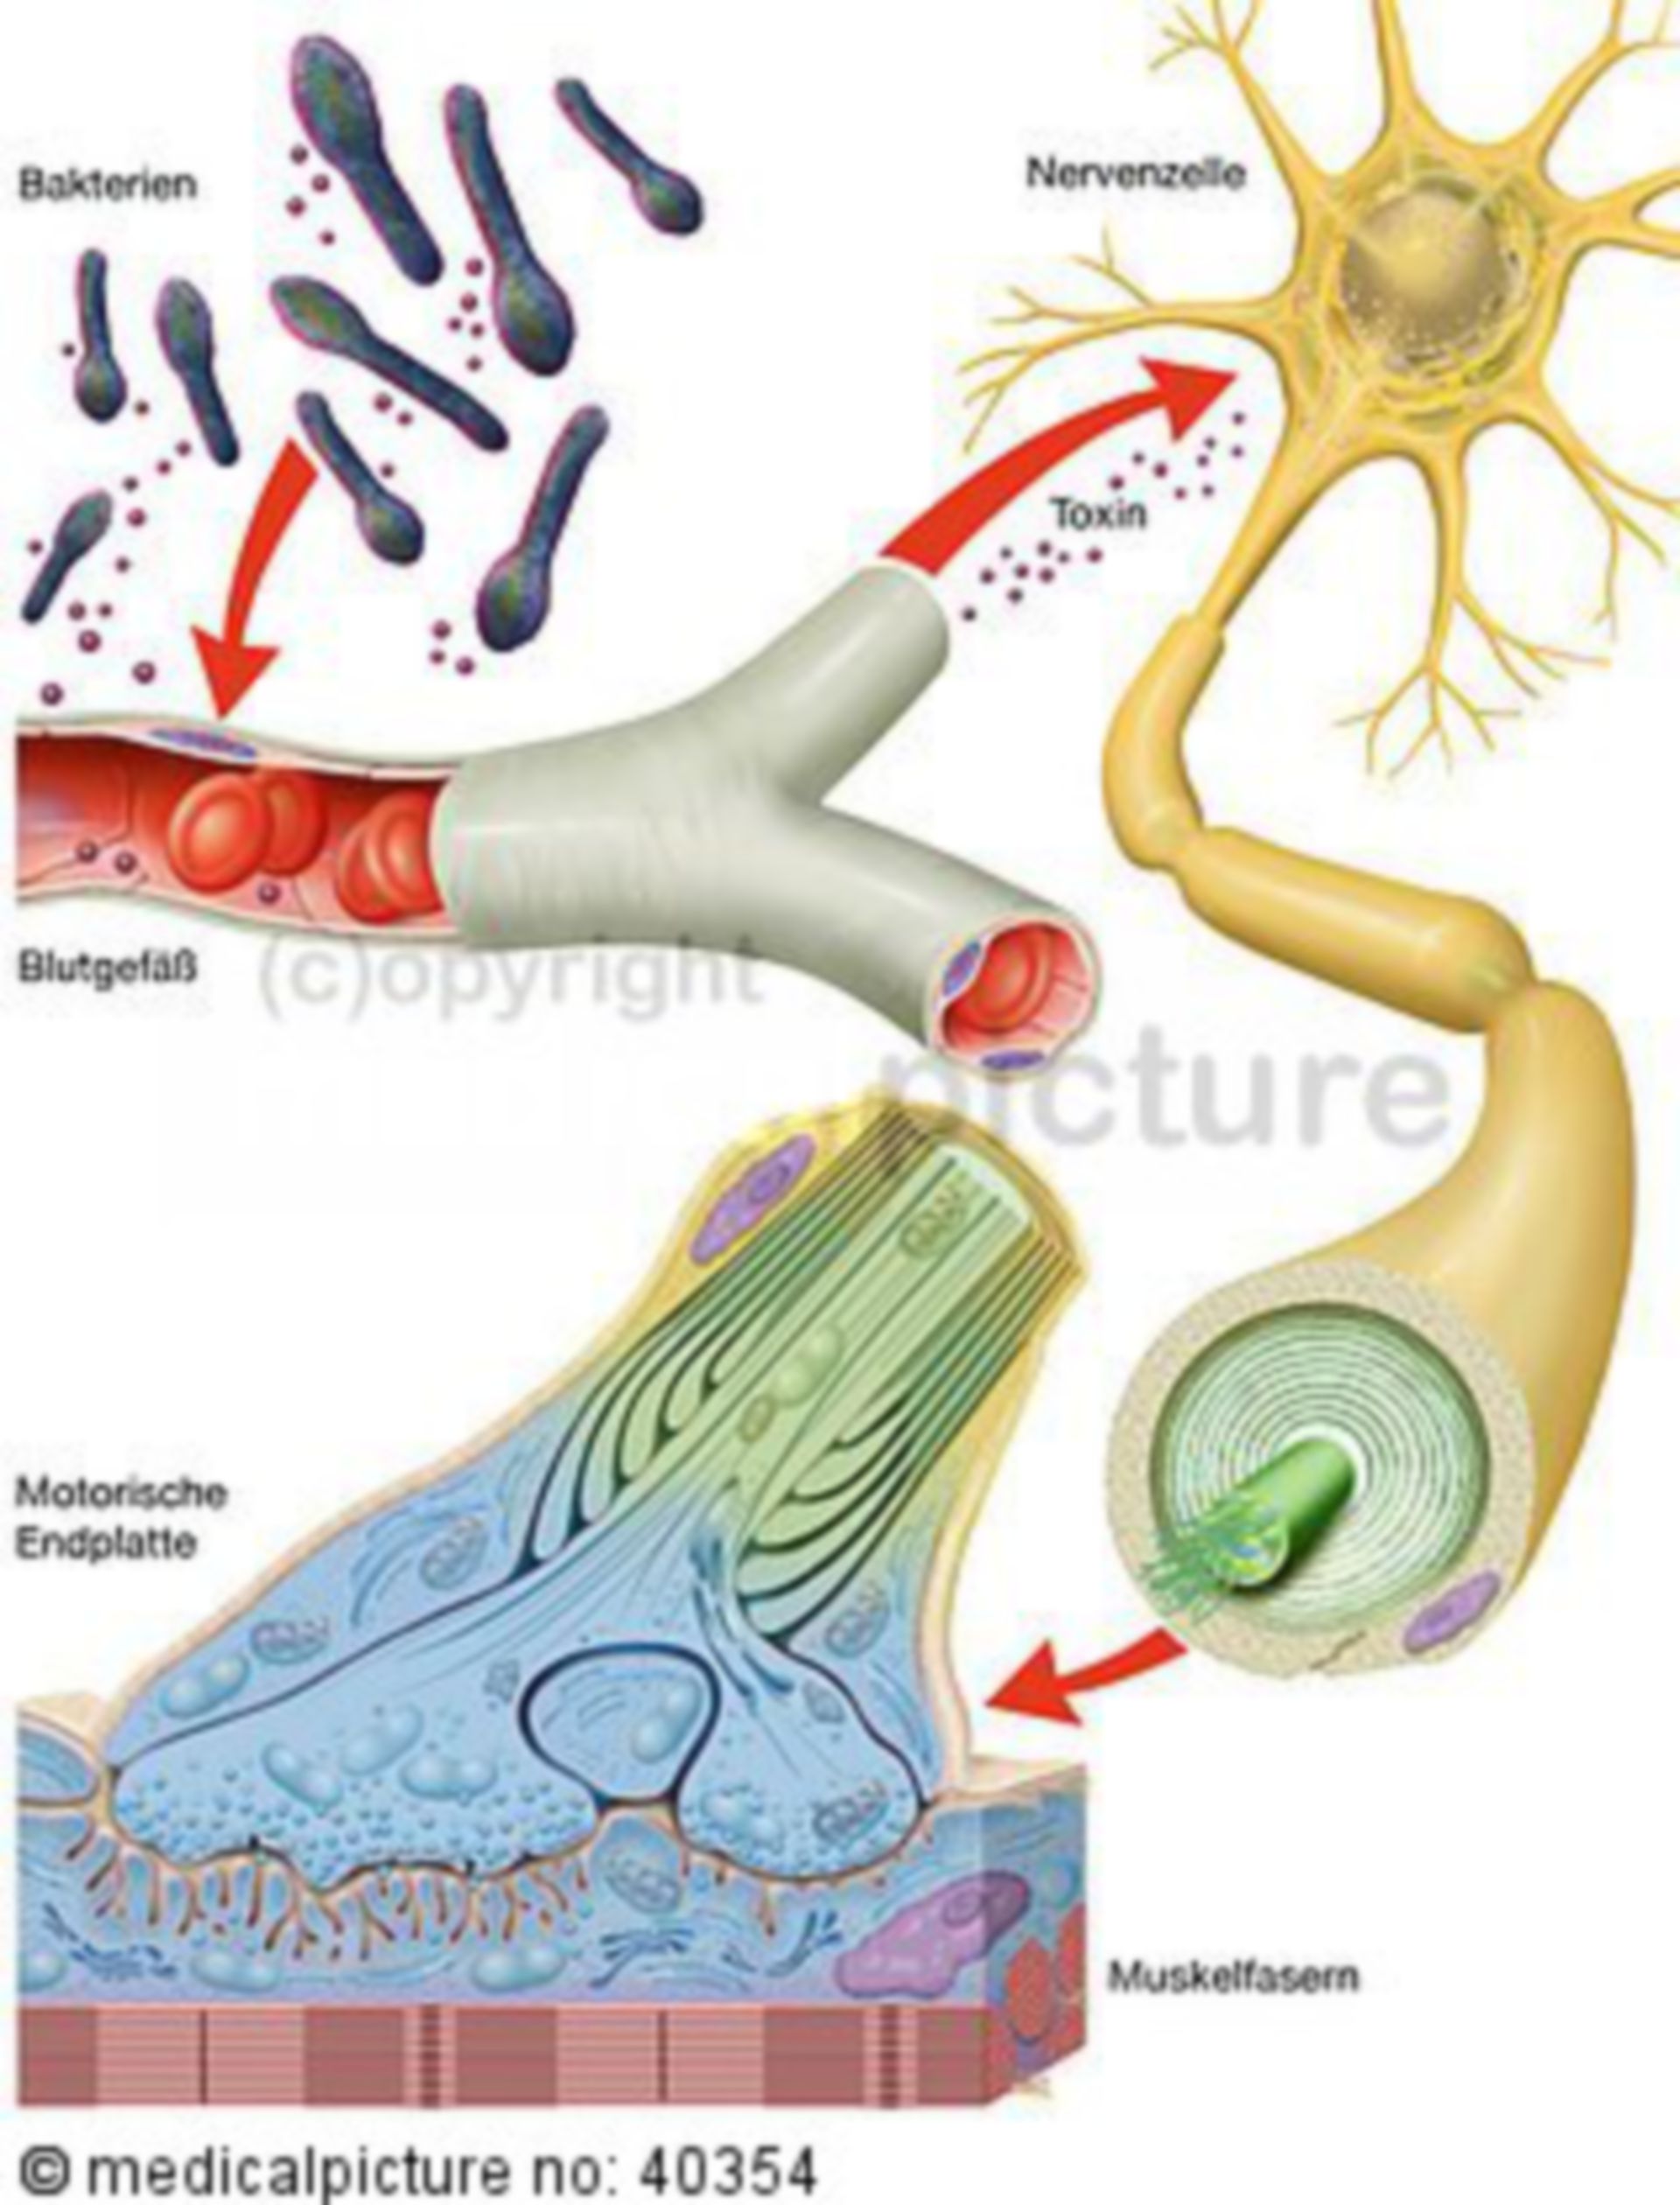 Clostridium tetani, tetanus: Path of infection